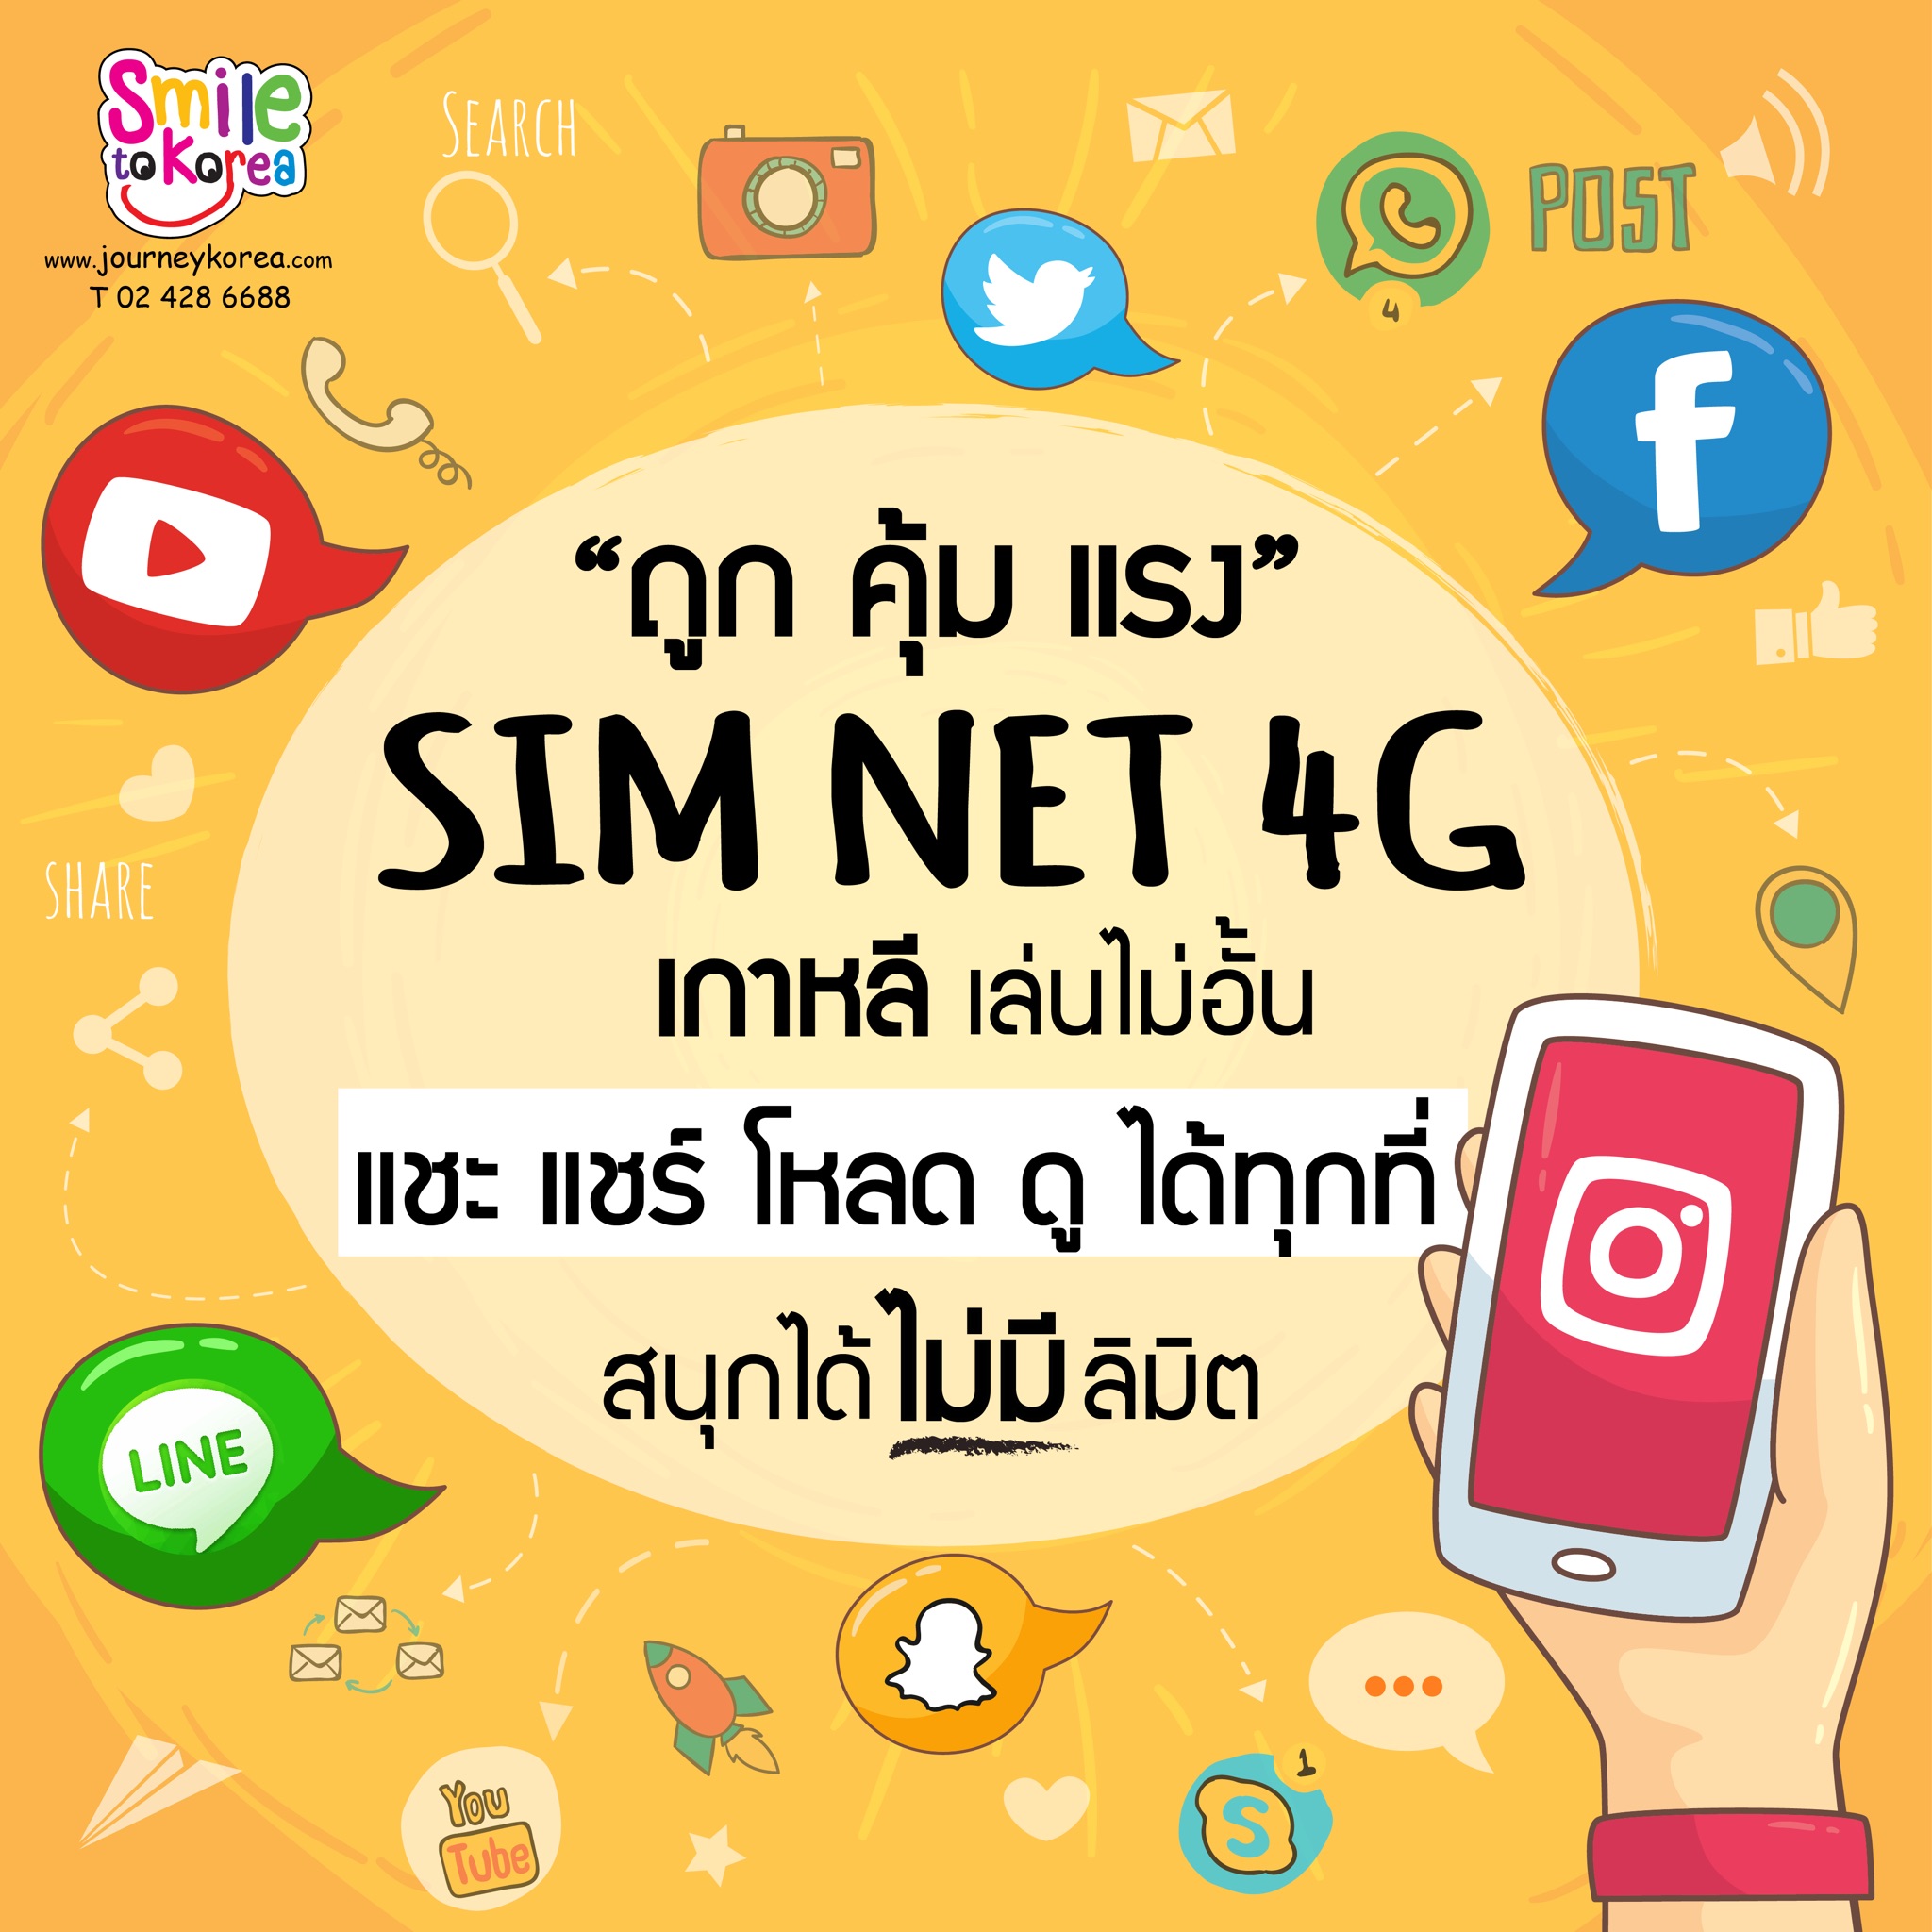 SIM NET